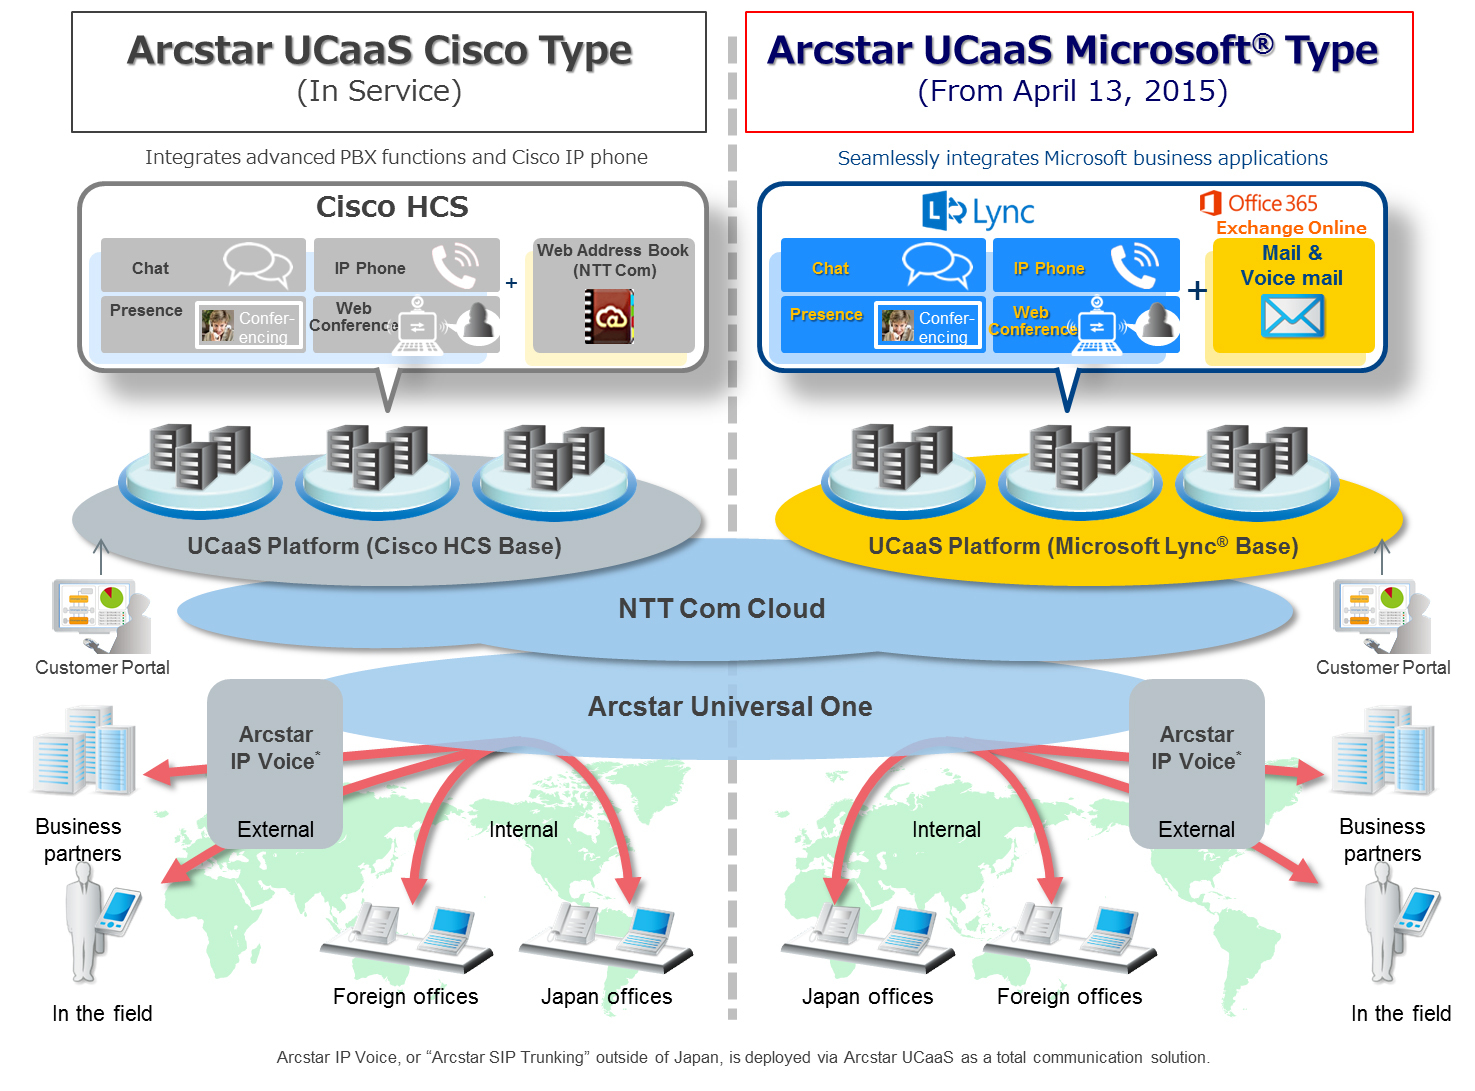 NTT Communications Launches Arcstar UCaaS Microsoft® Type as New 